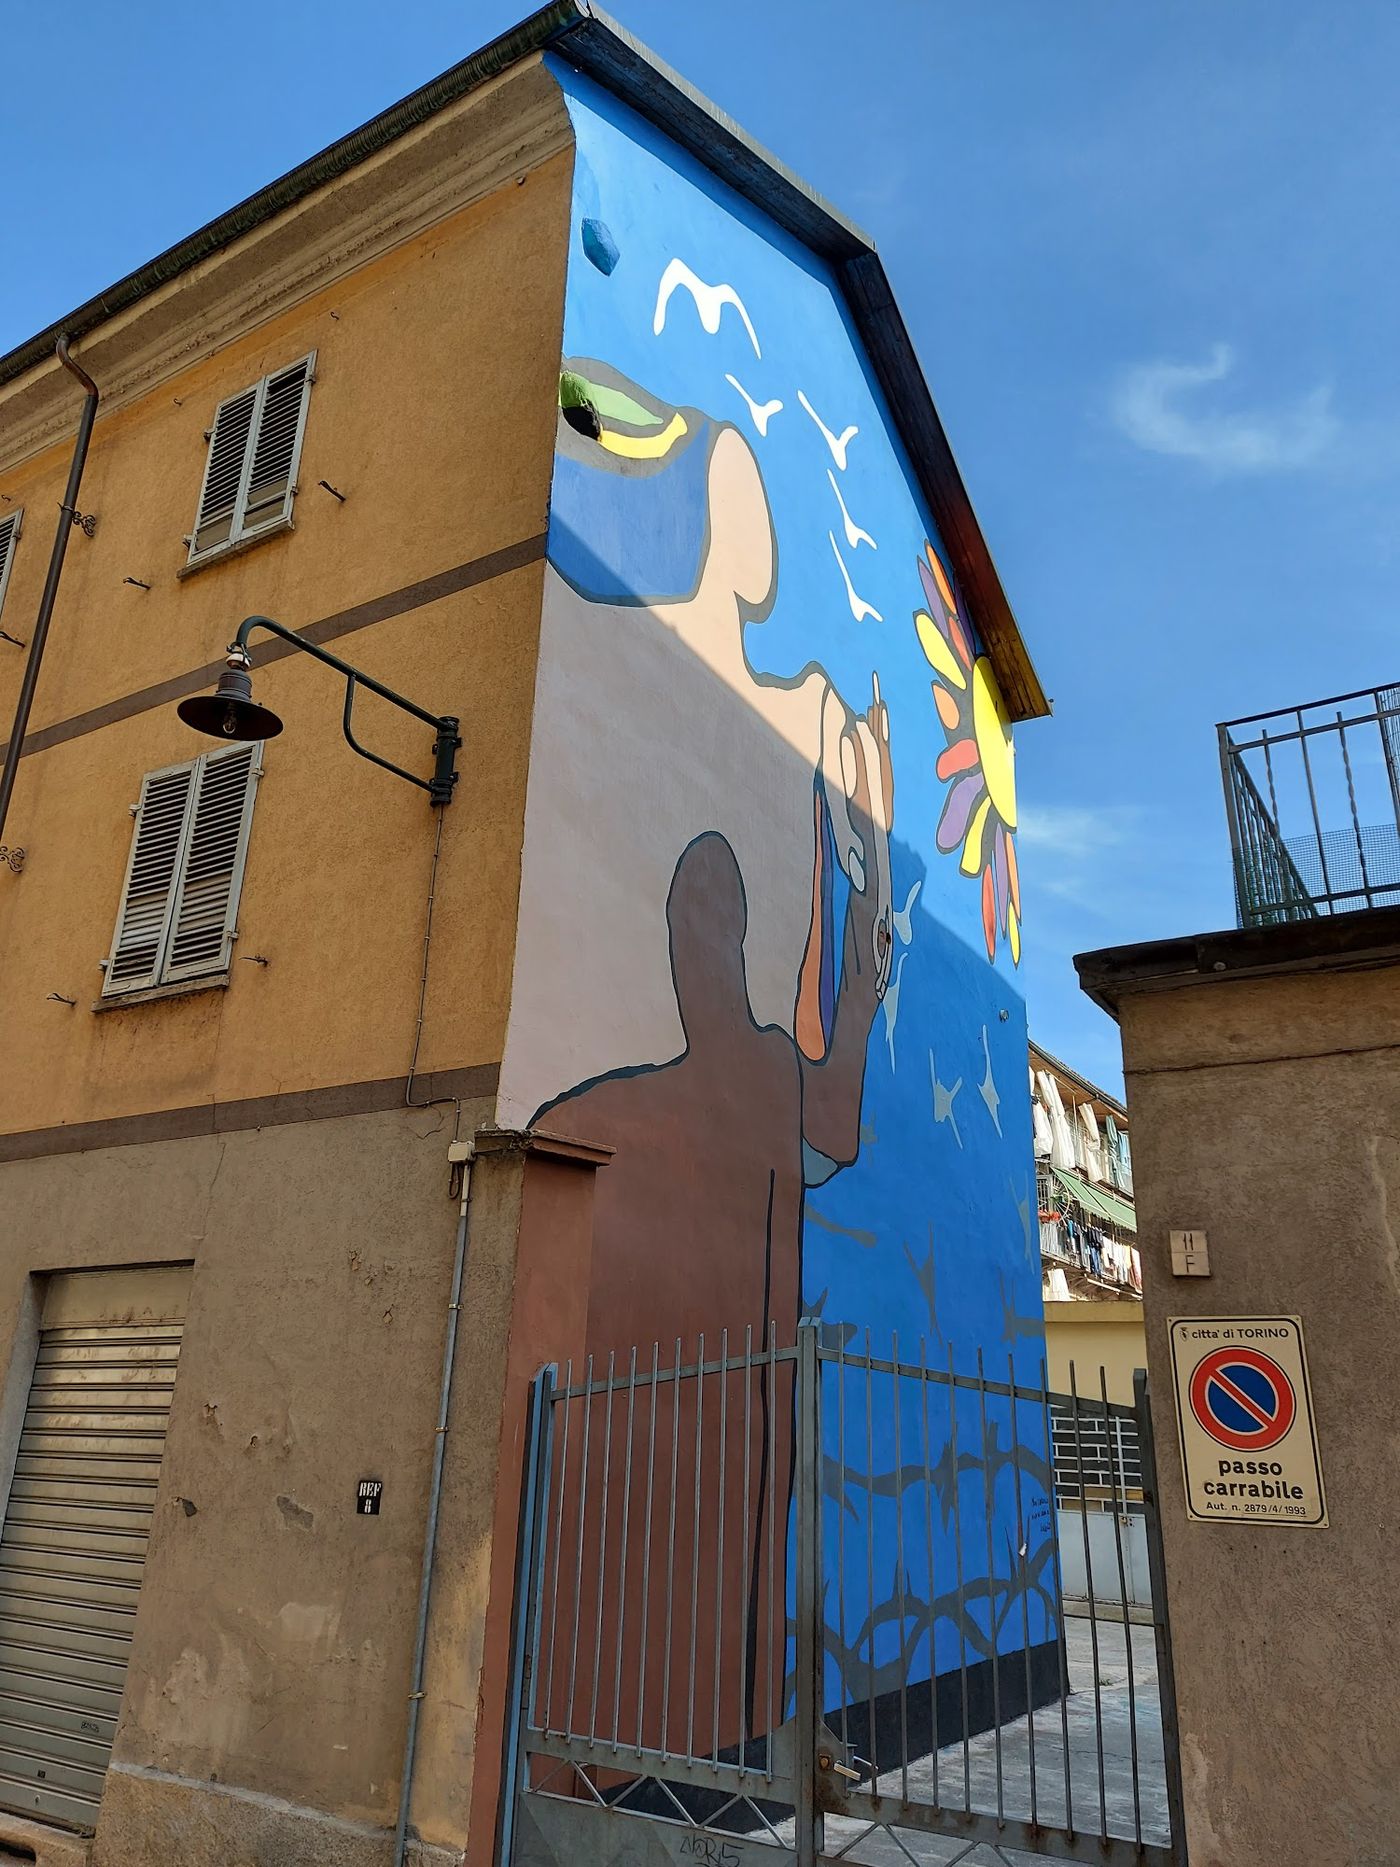 Entdecke Turins Straßenkunst